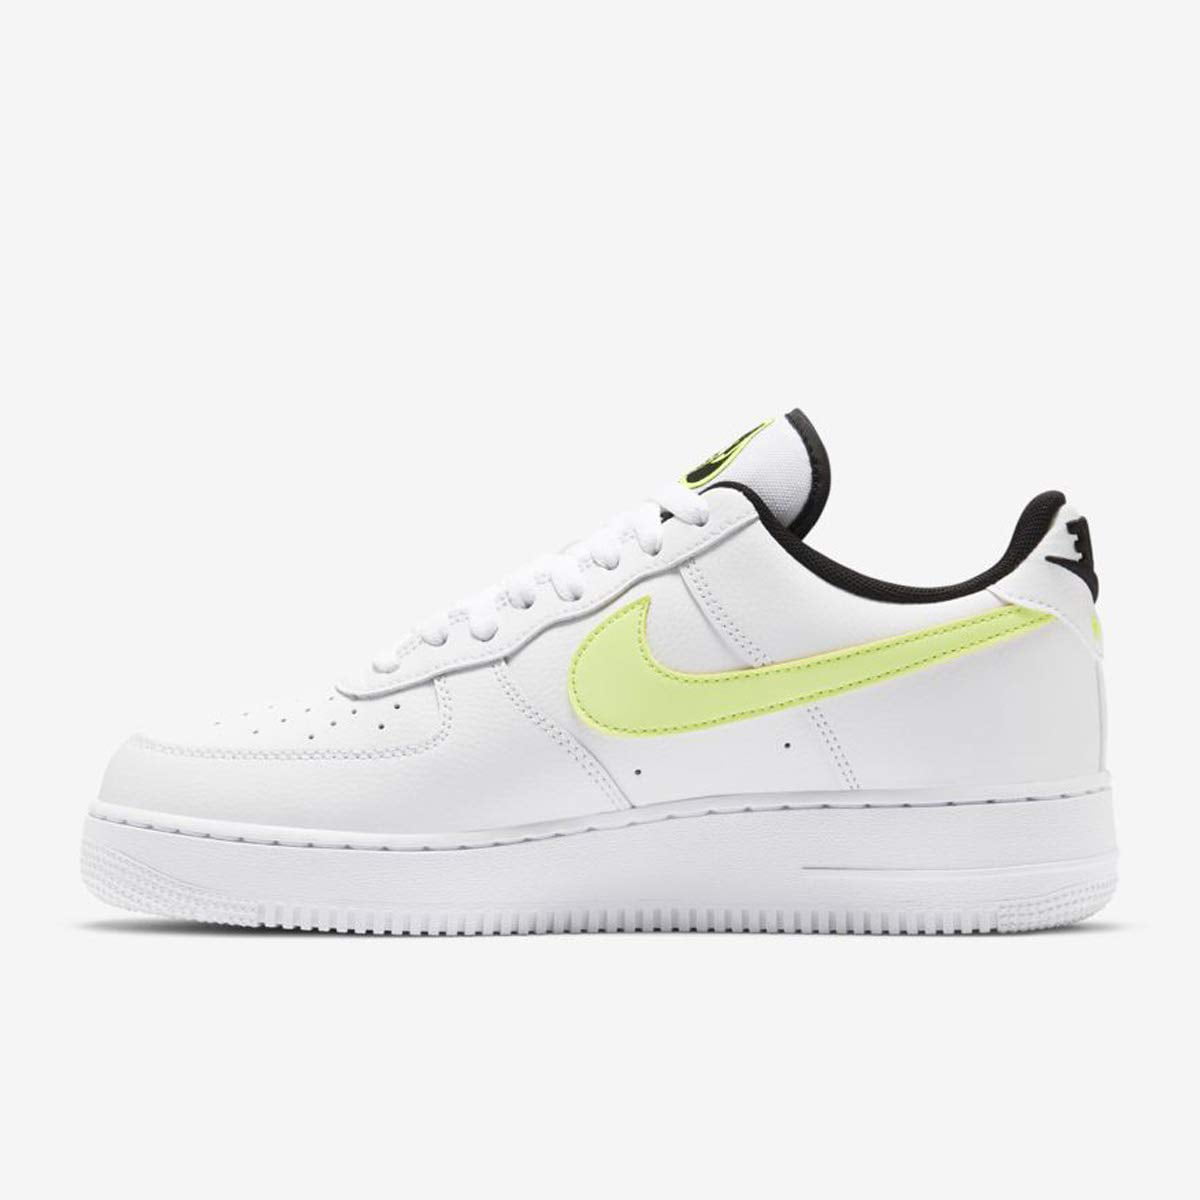 Nike Air Force 1 '07 lv8 Worldwide Sneakers - Black, Size 8.5 Mens